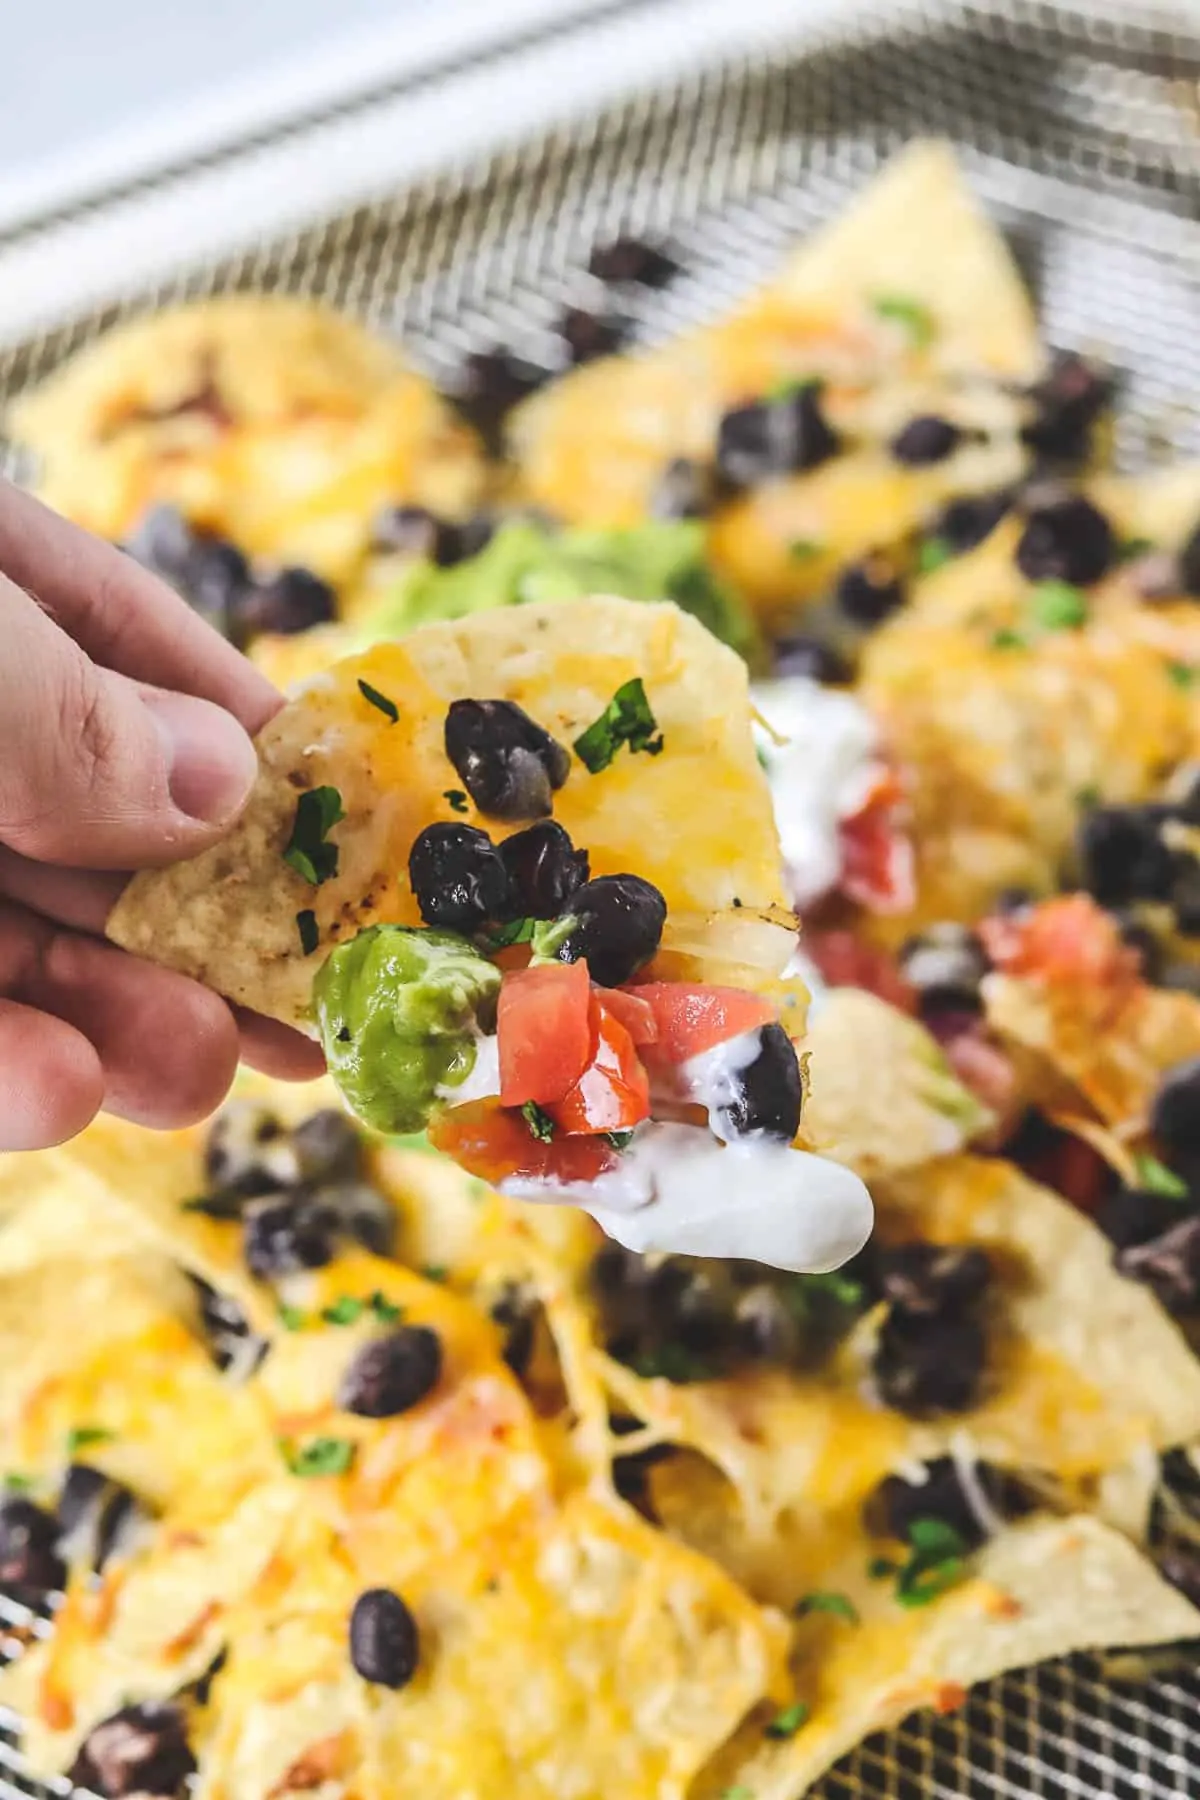 holding a chip of nachos with black beans, cheese, guacamole, sour cream, and pico de gallo